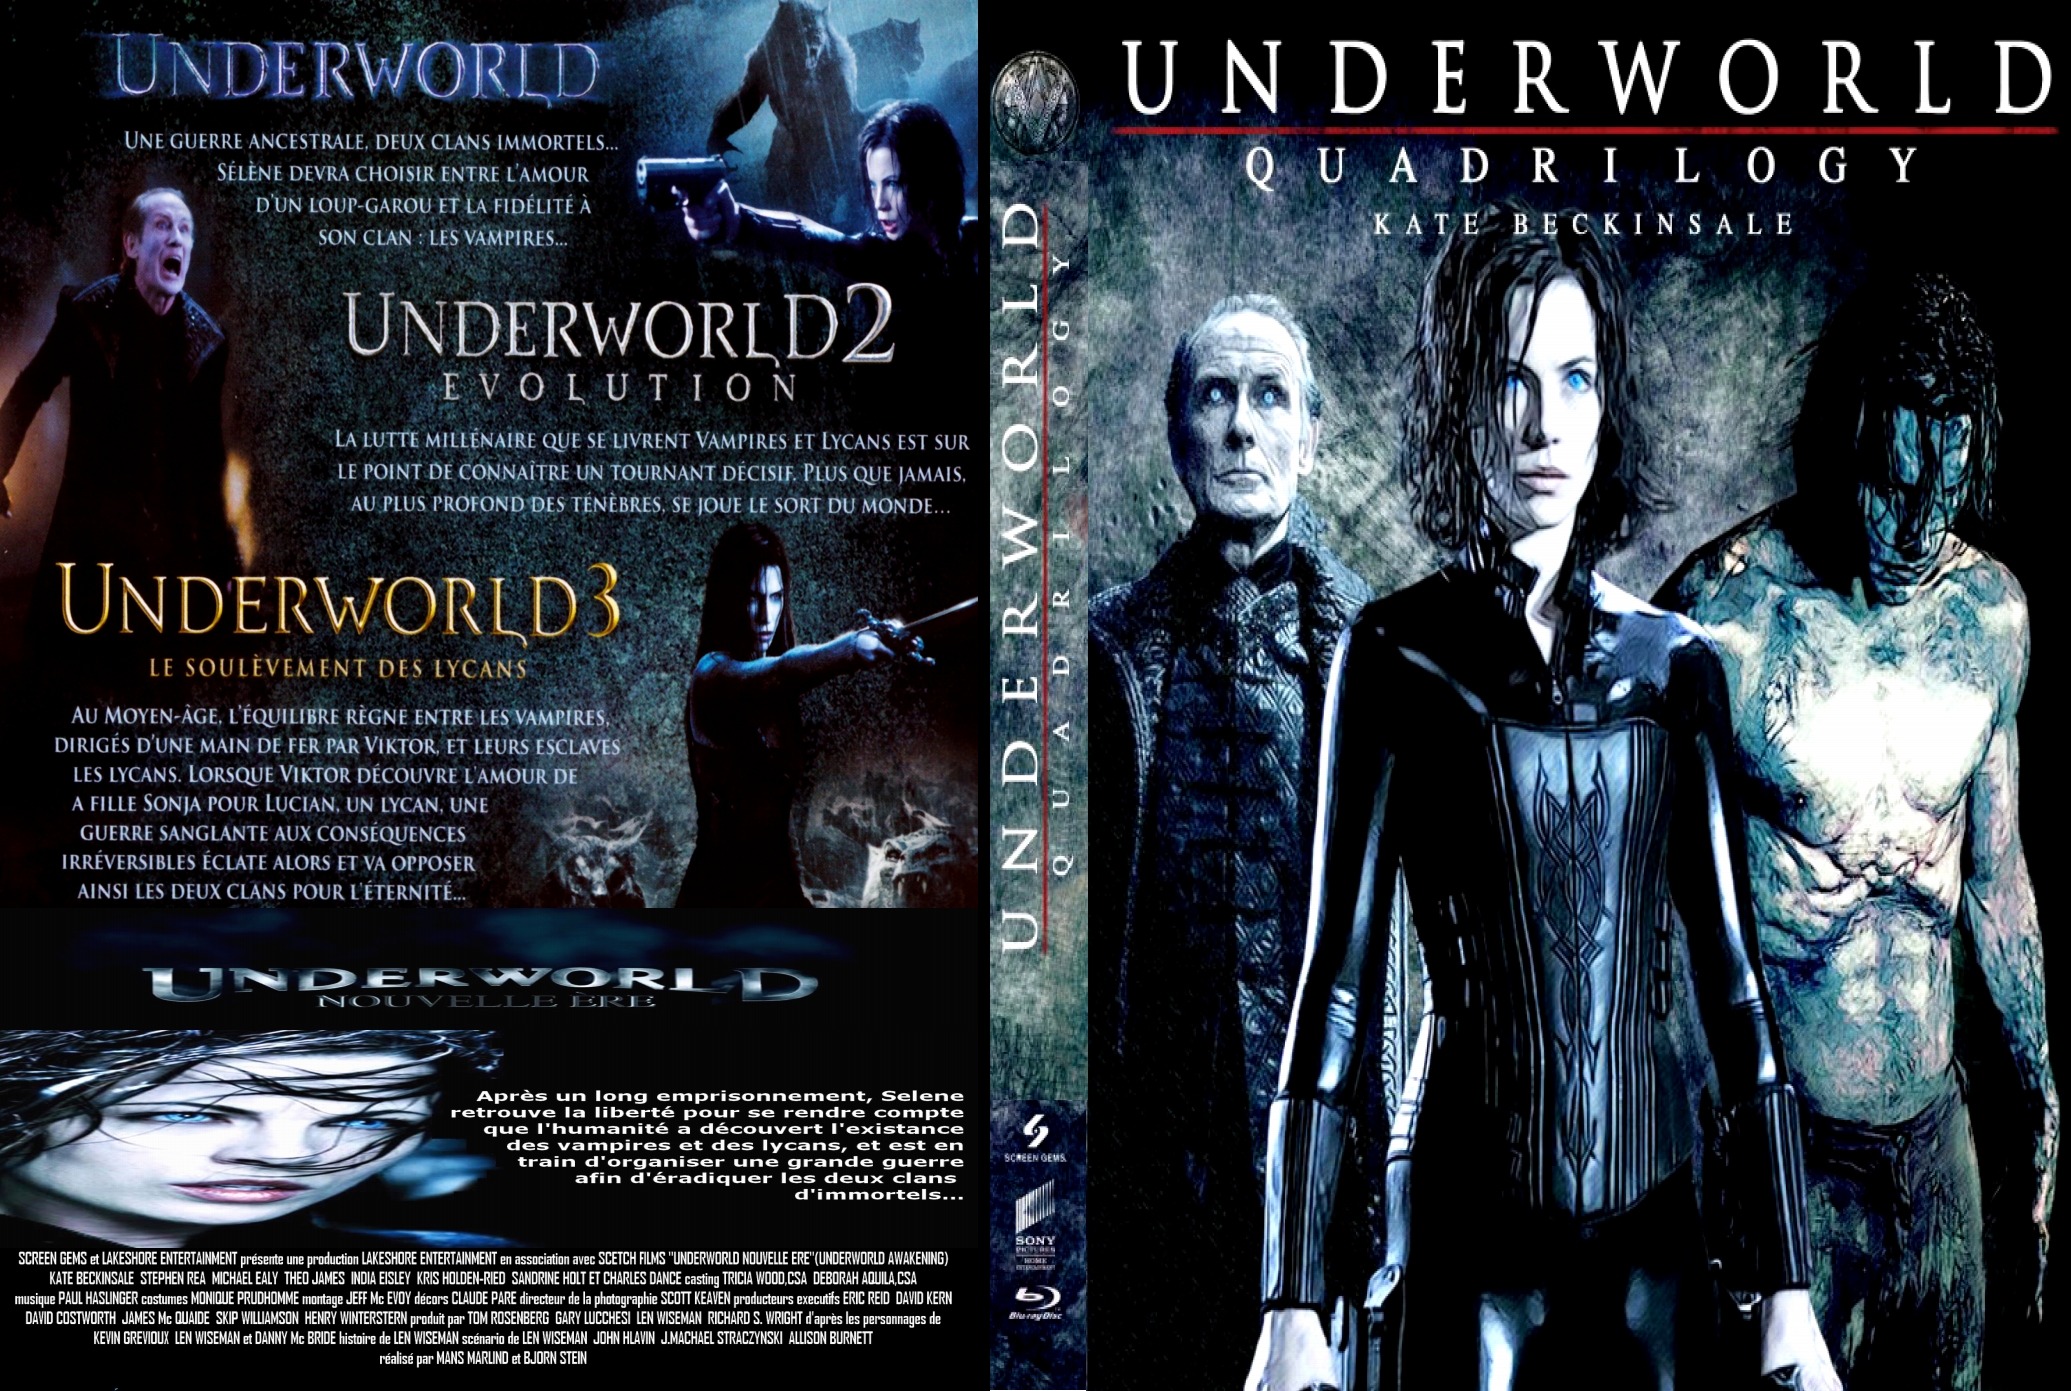 Jaquette DVD Underworld quadrilogie custom (BLU-RAY)